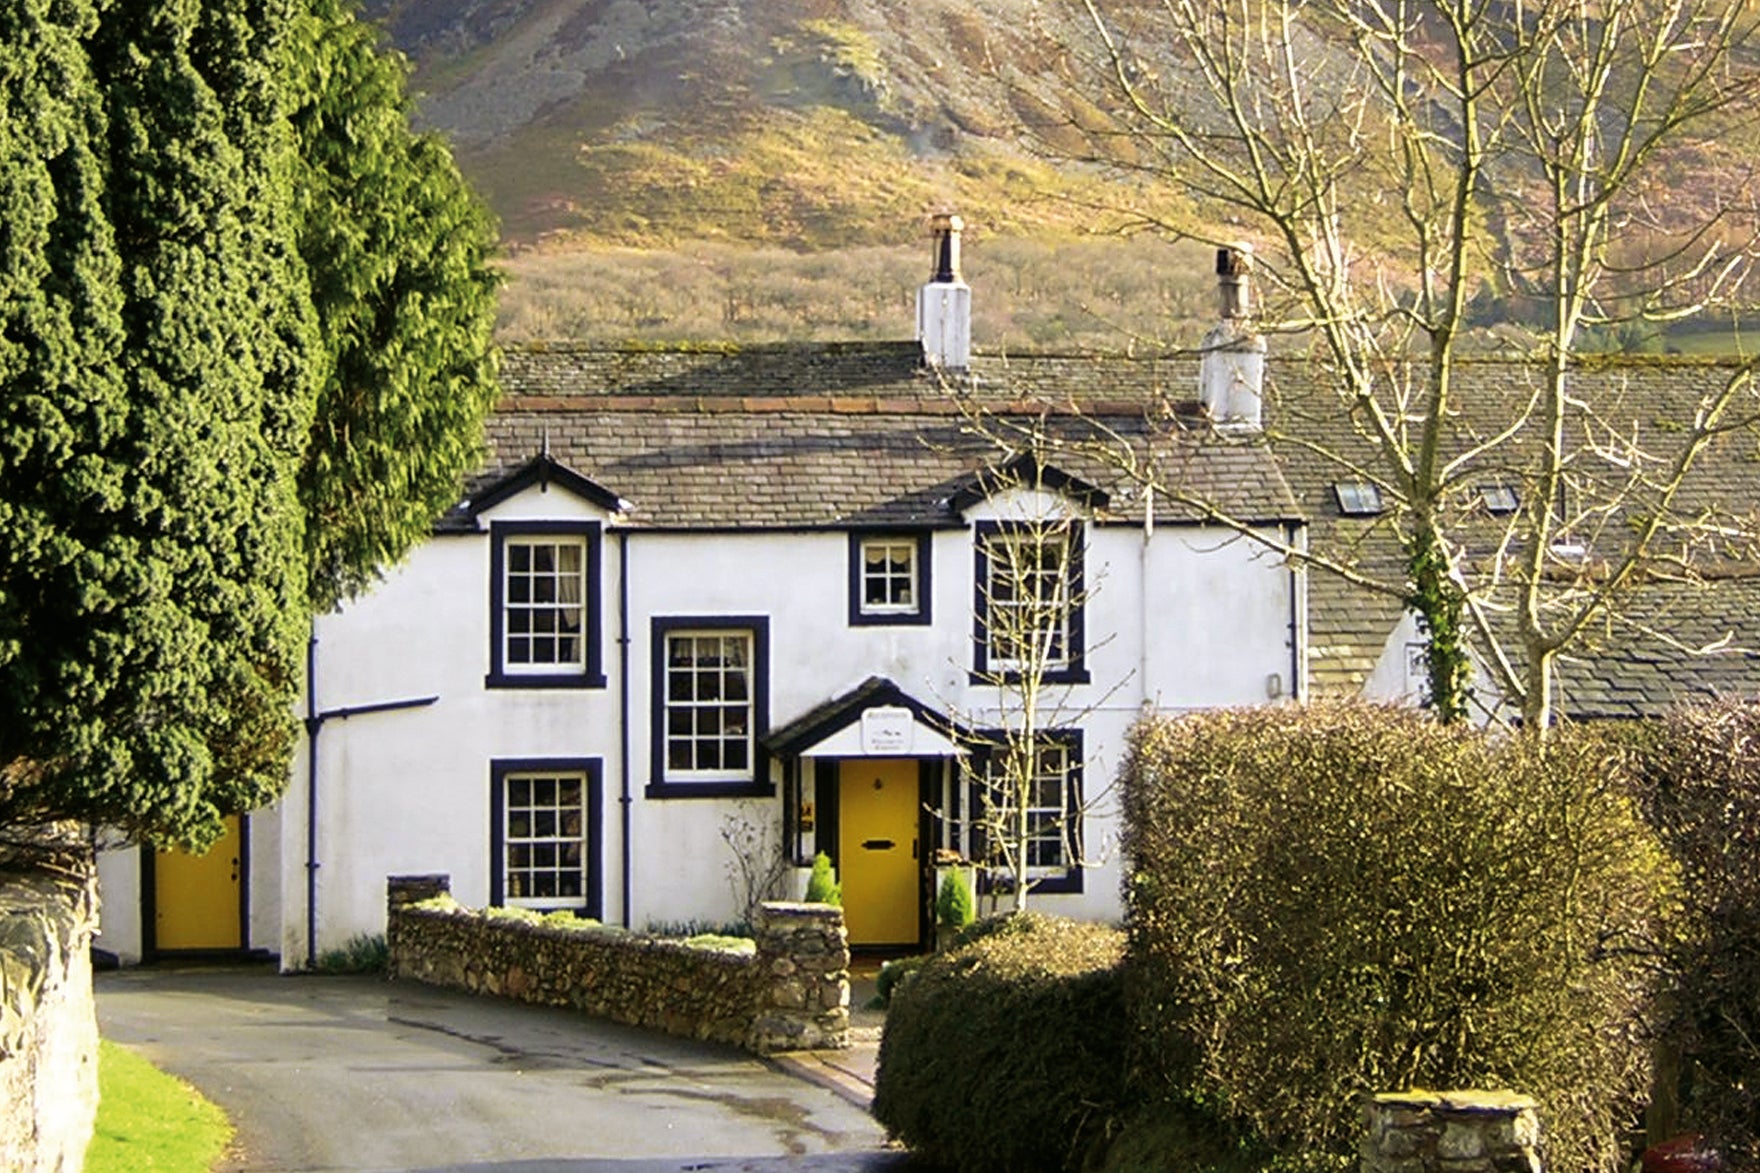 The Kirkstile Inn in Cumbria is set in breathtaking countryside